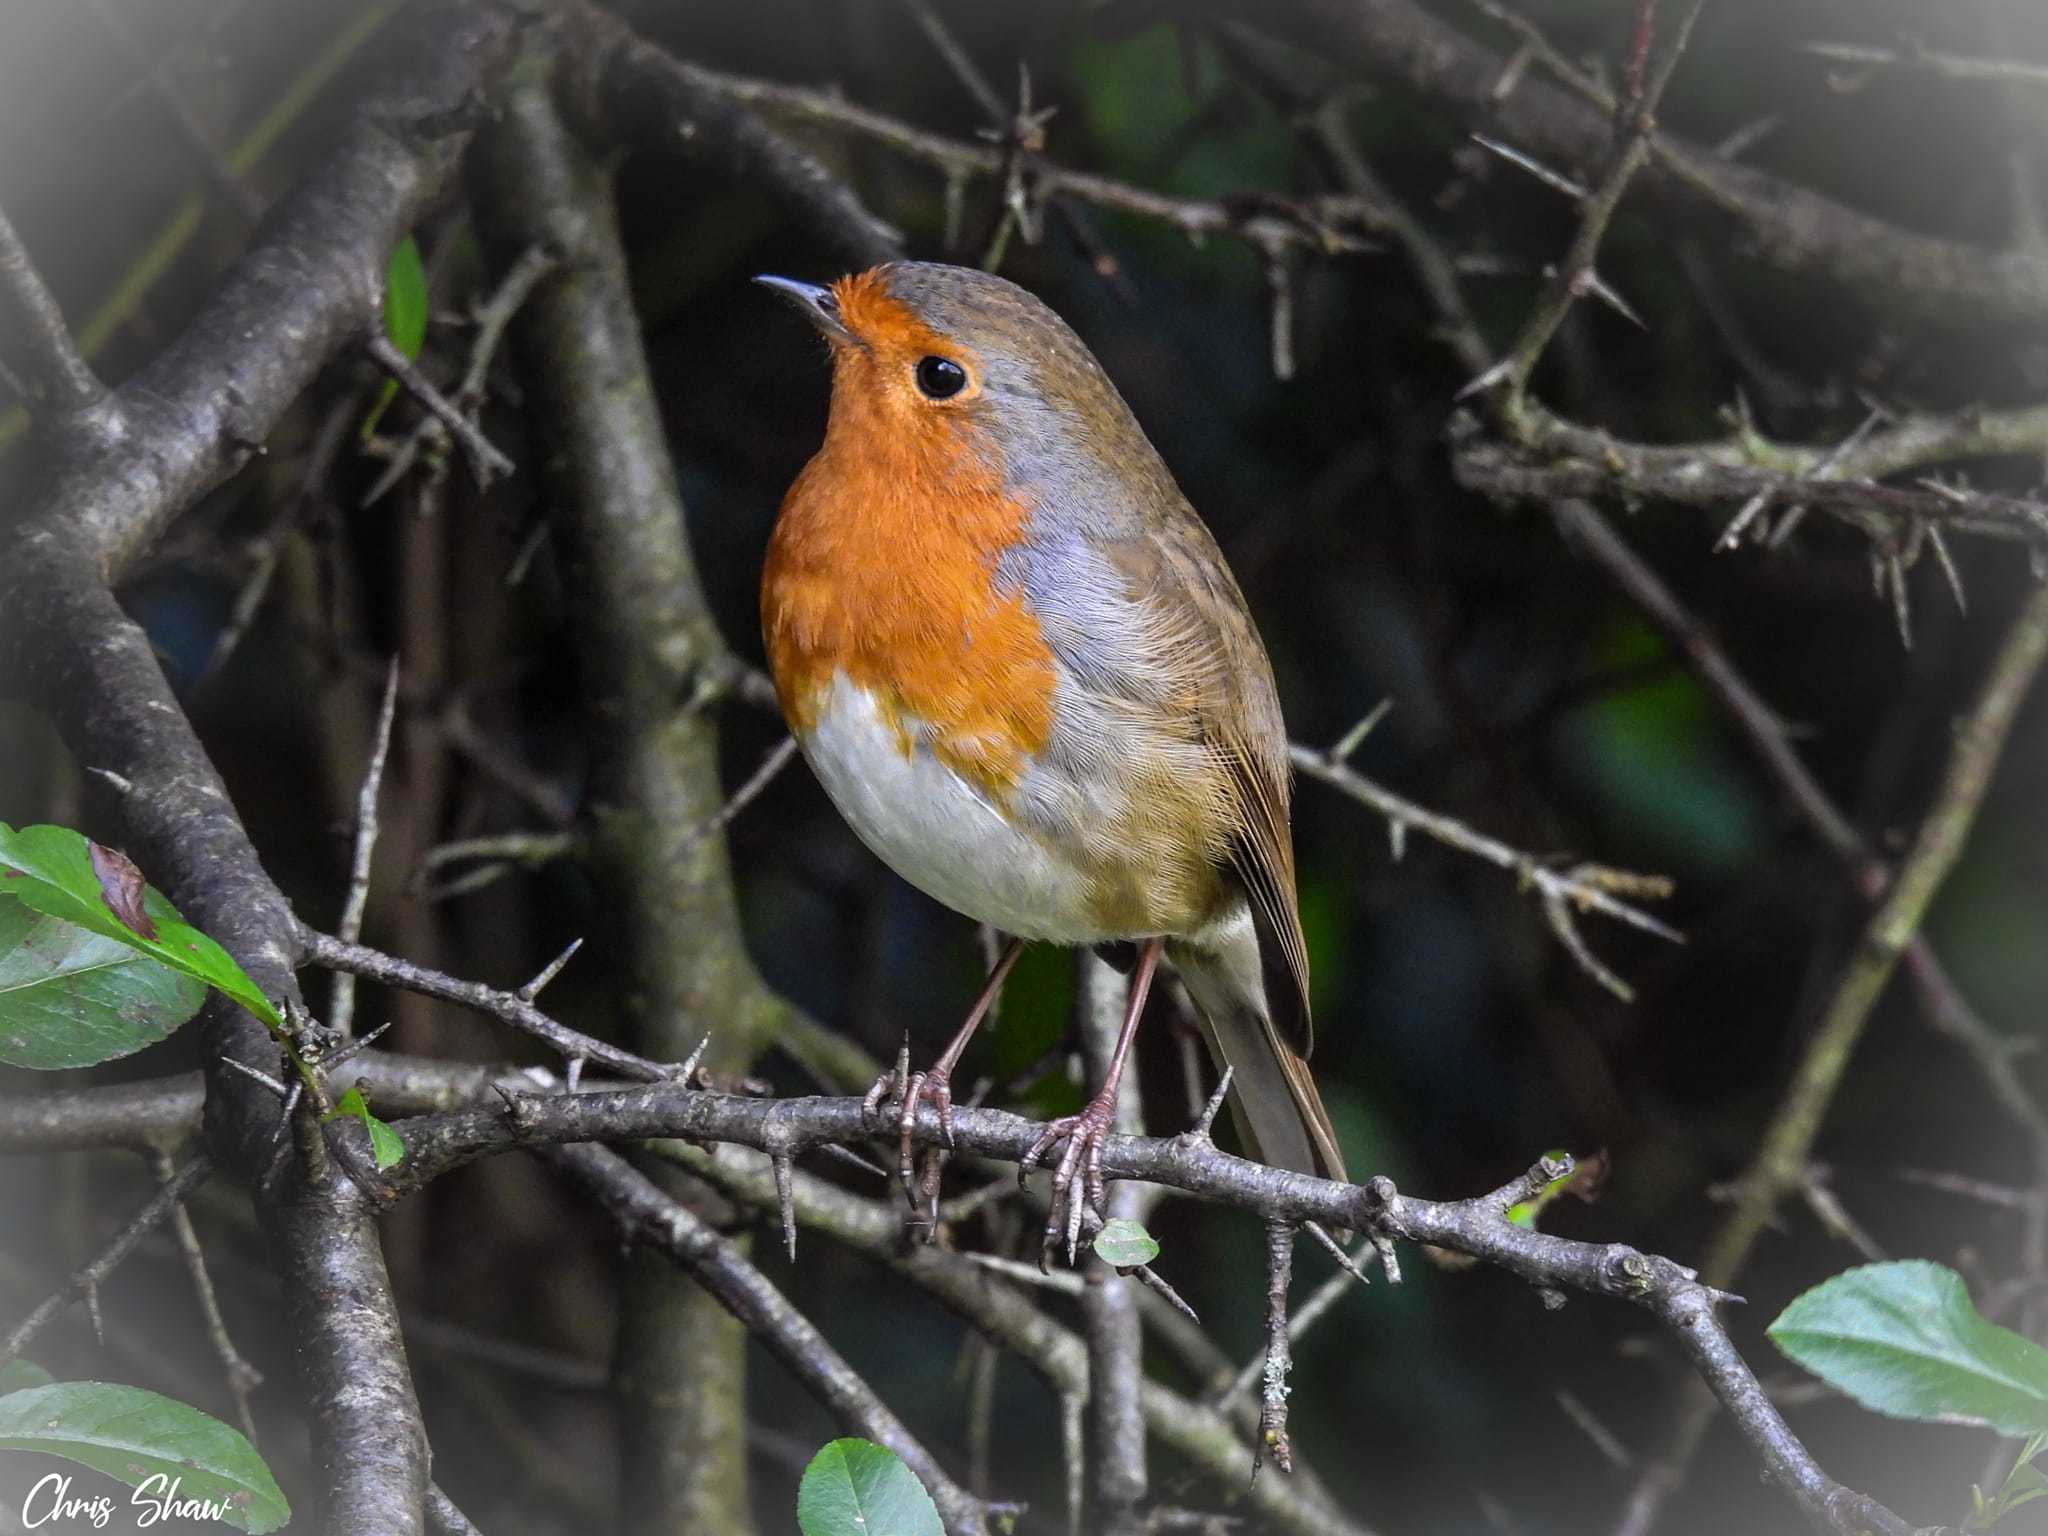 Christmas robin at Sherdley Park by Chris Shaw